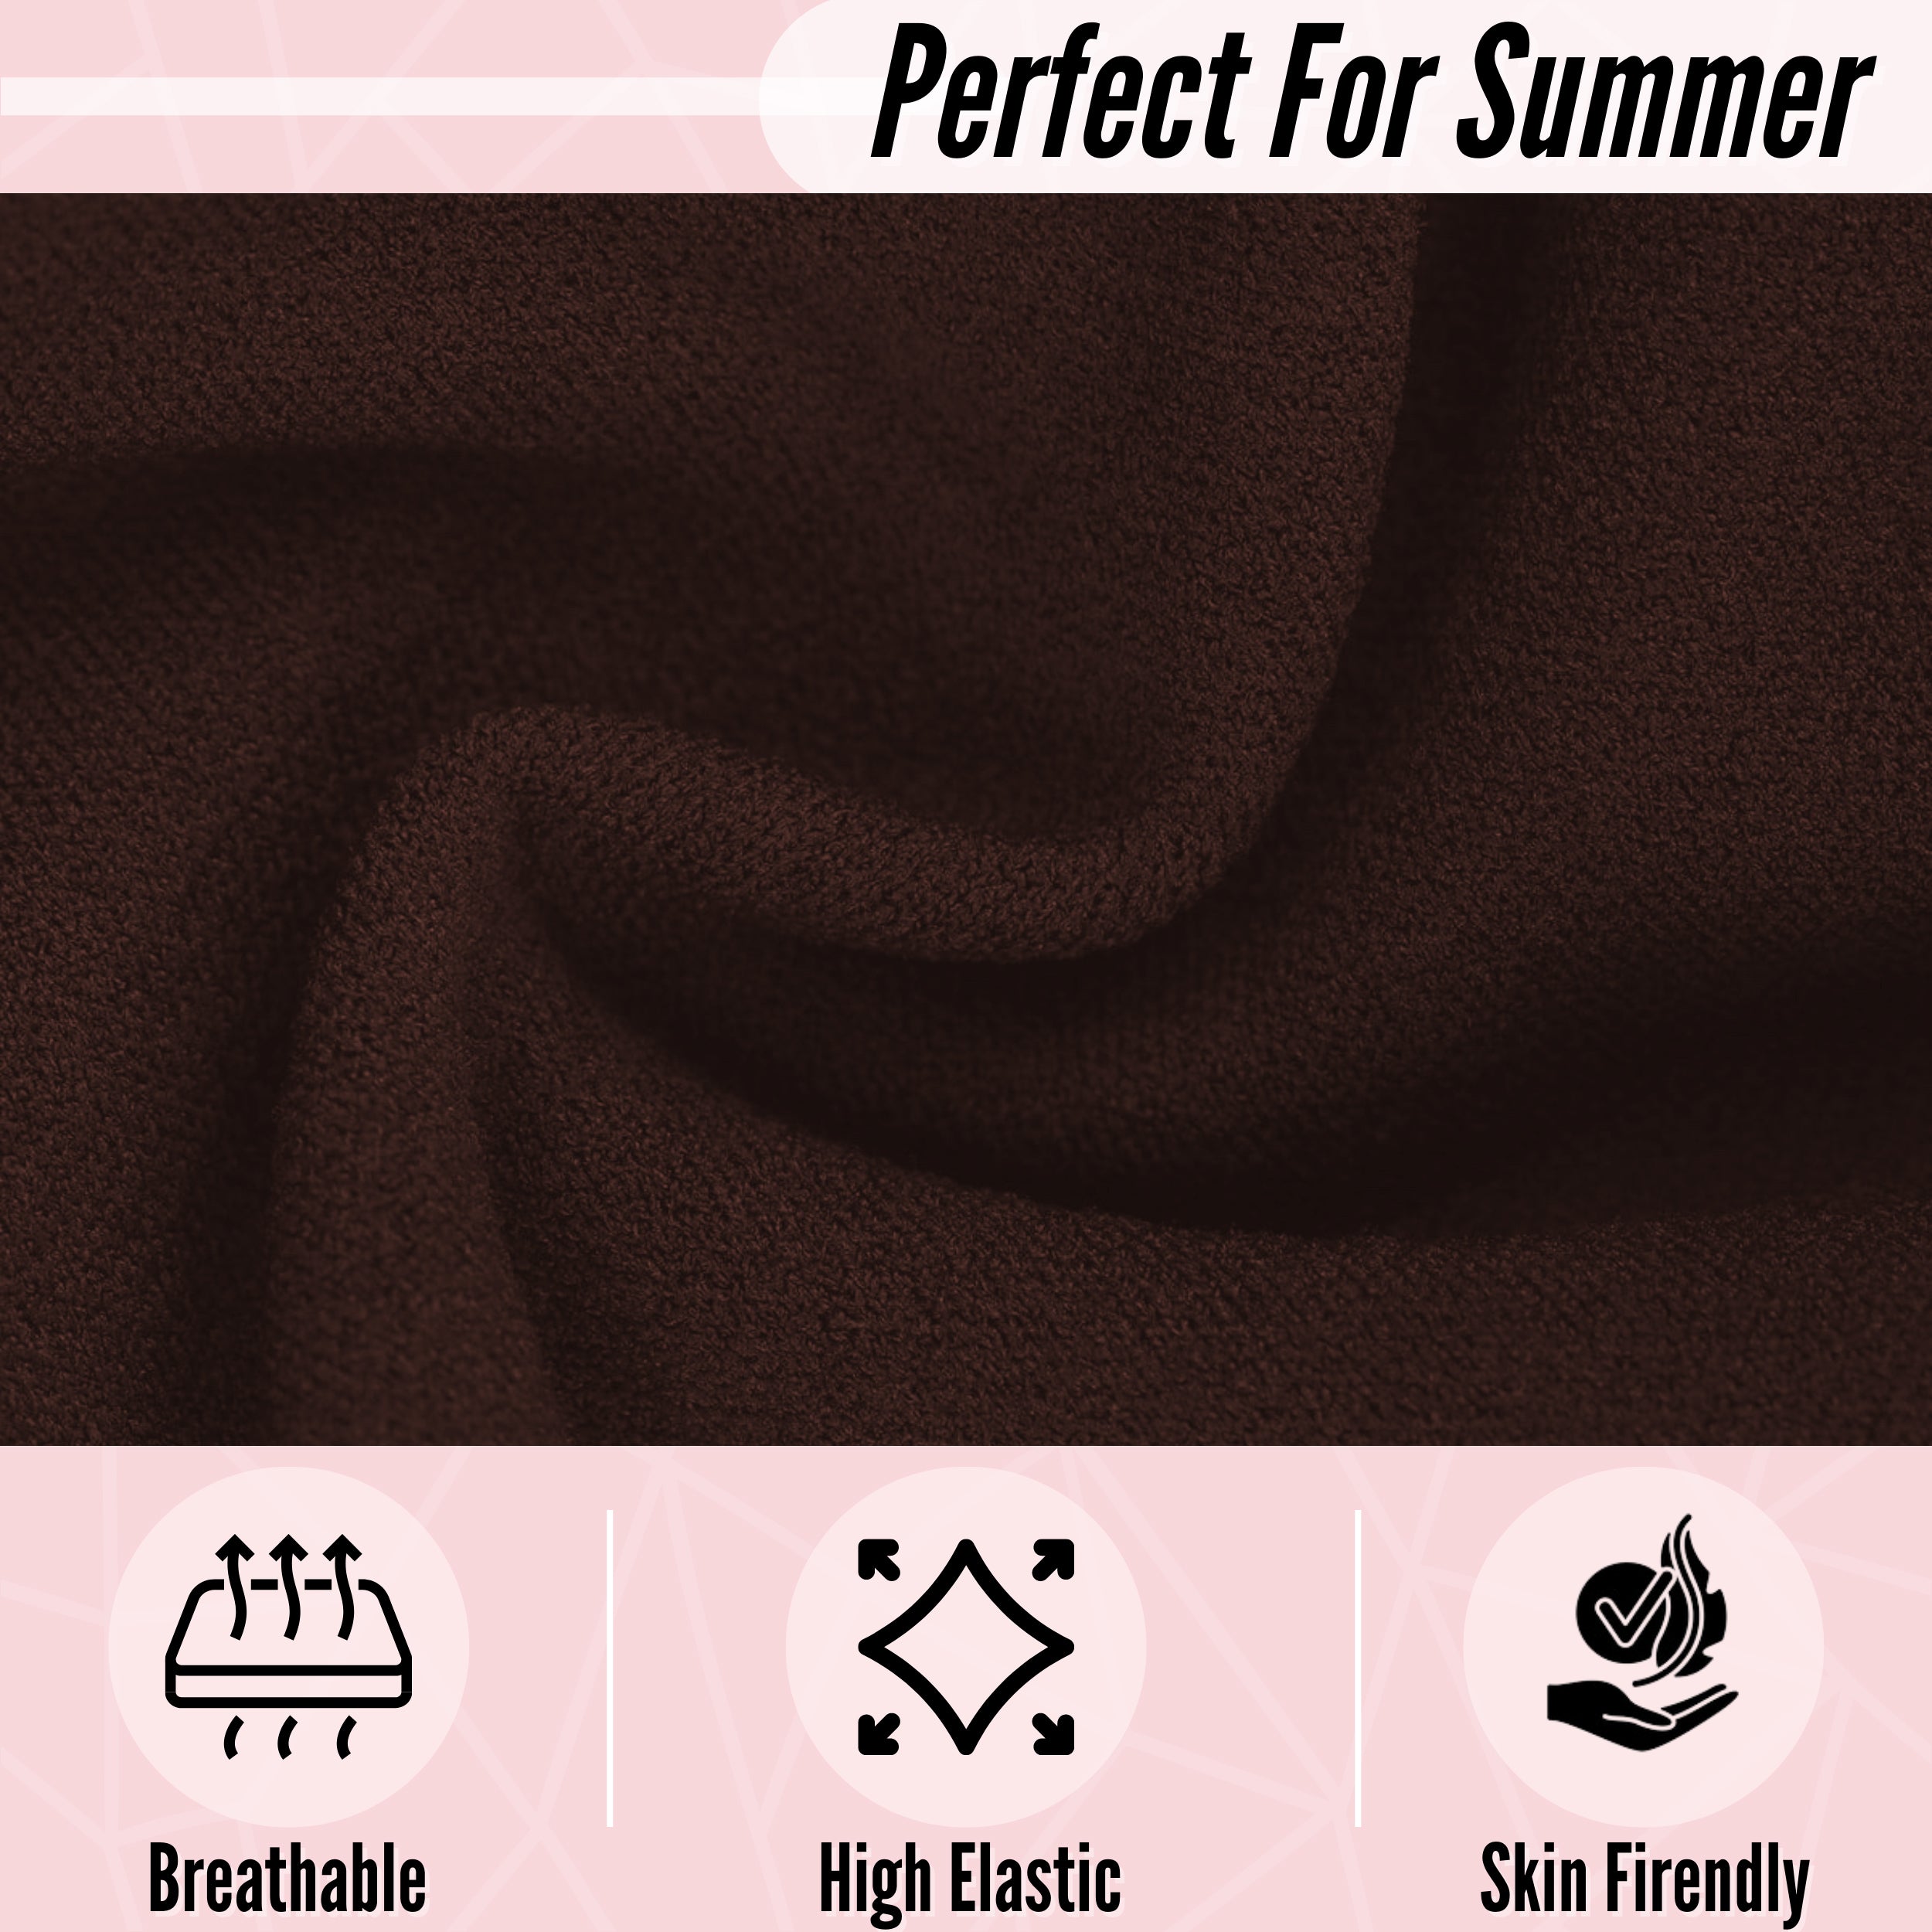 Seamless Shapewear Bodysuit for Women - Women's Short Sleeve Seamless bodyshaper Thong Bodysuit